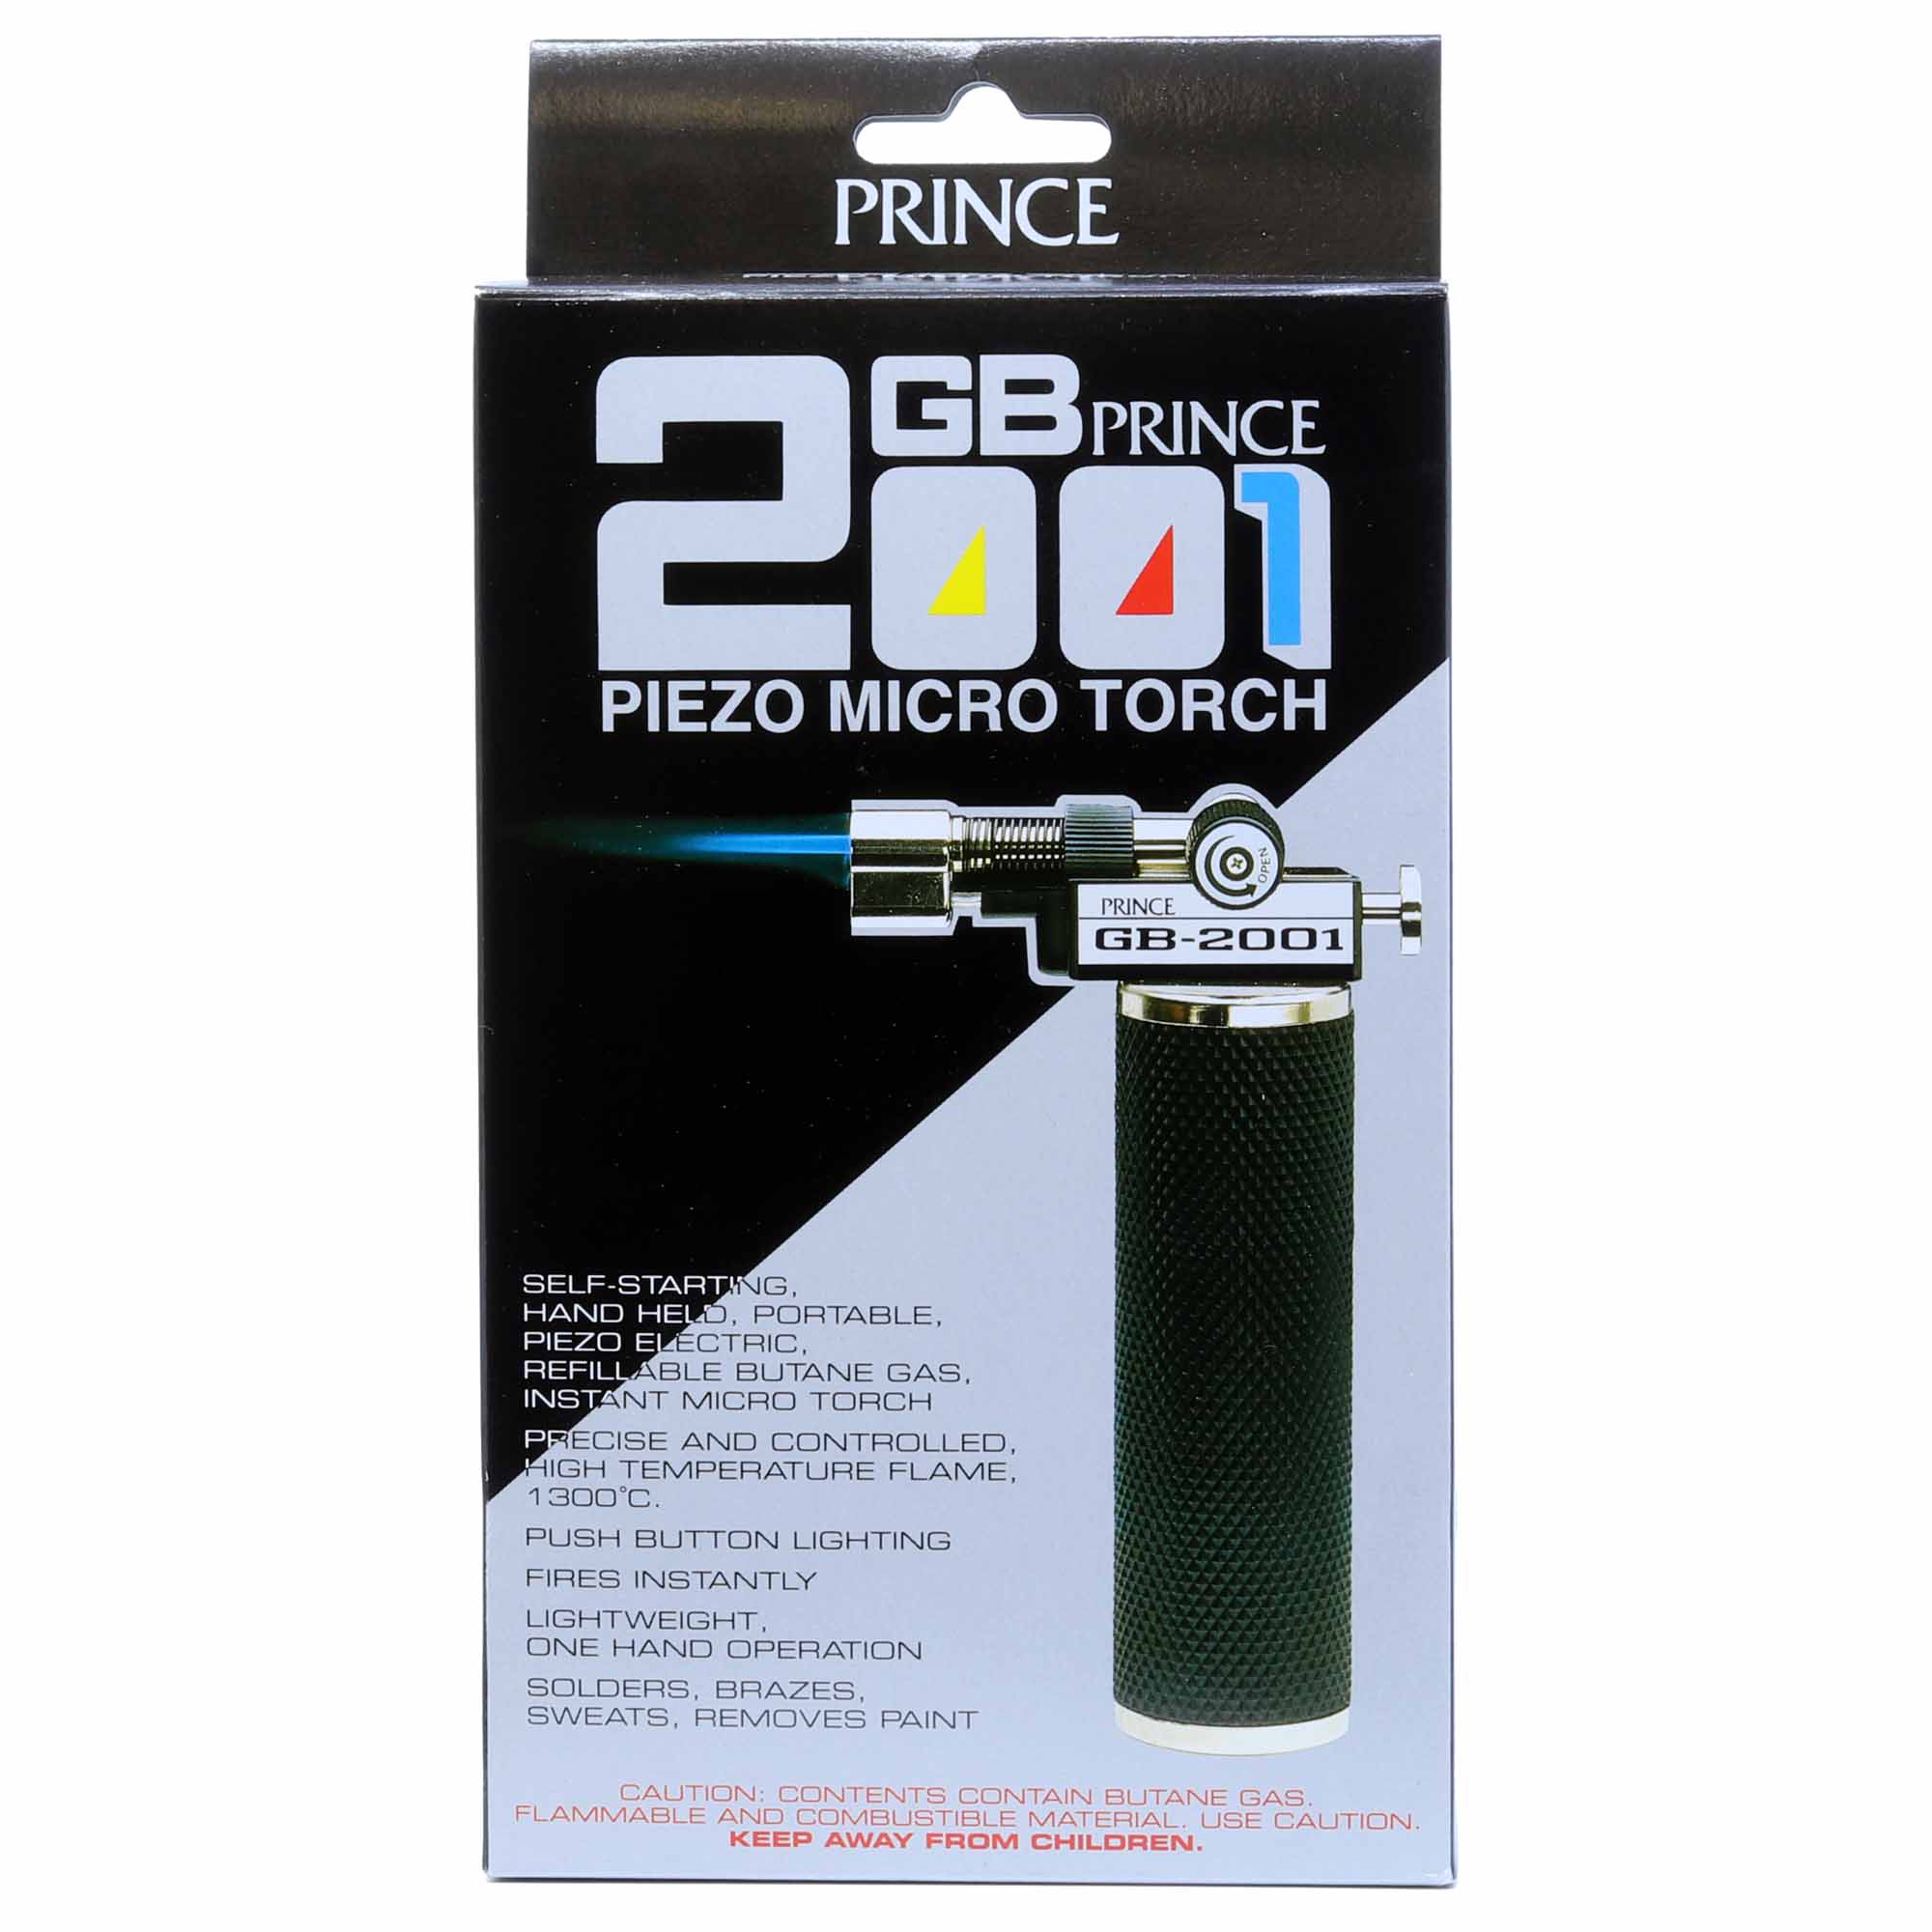 Prince GB-2001 Micro Torch